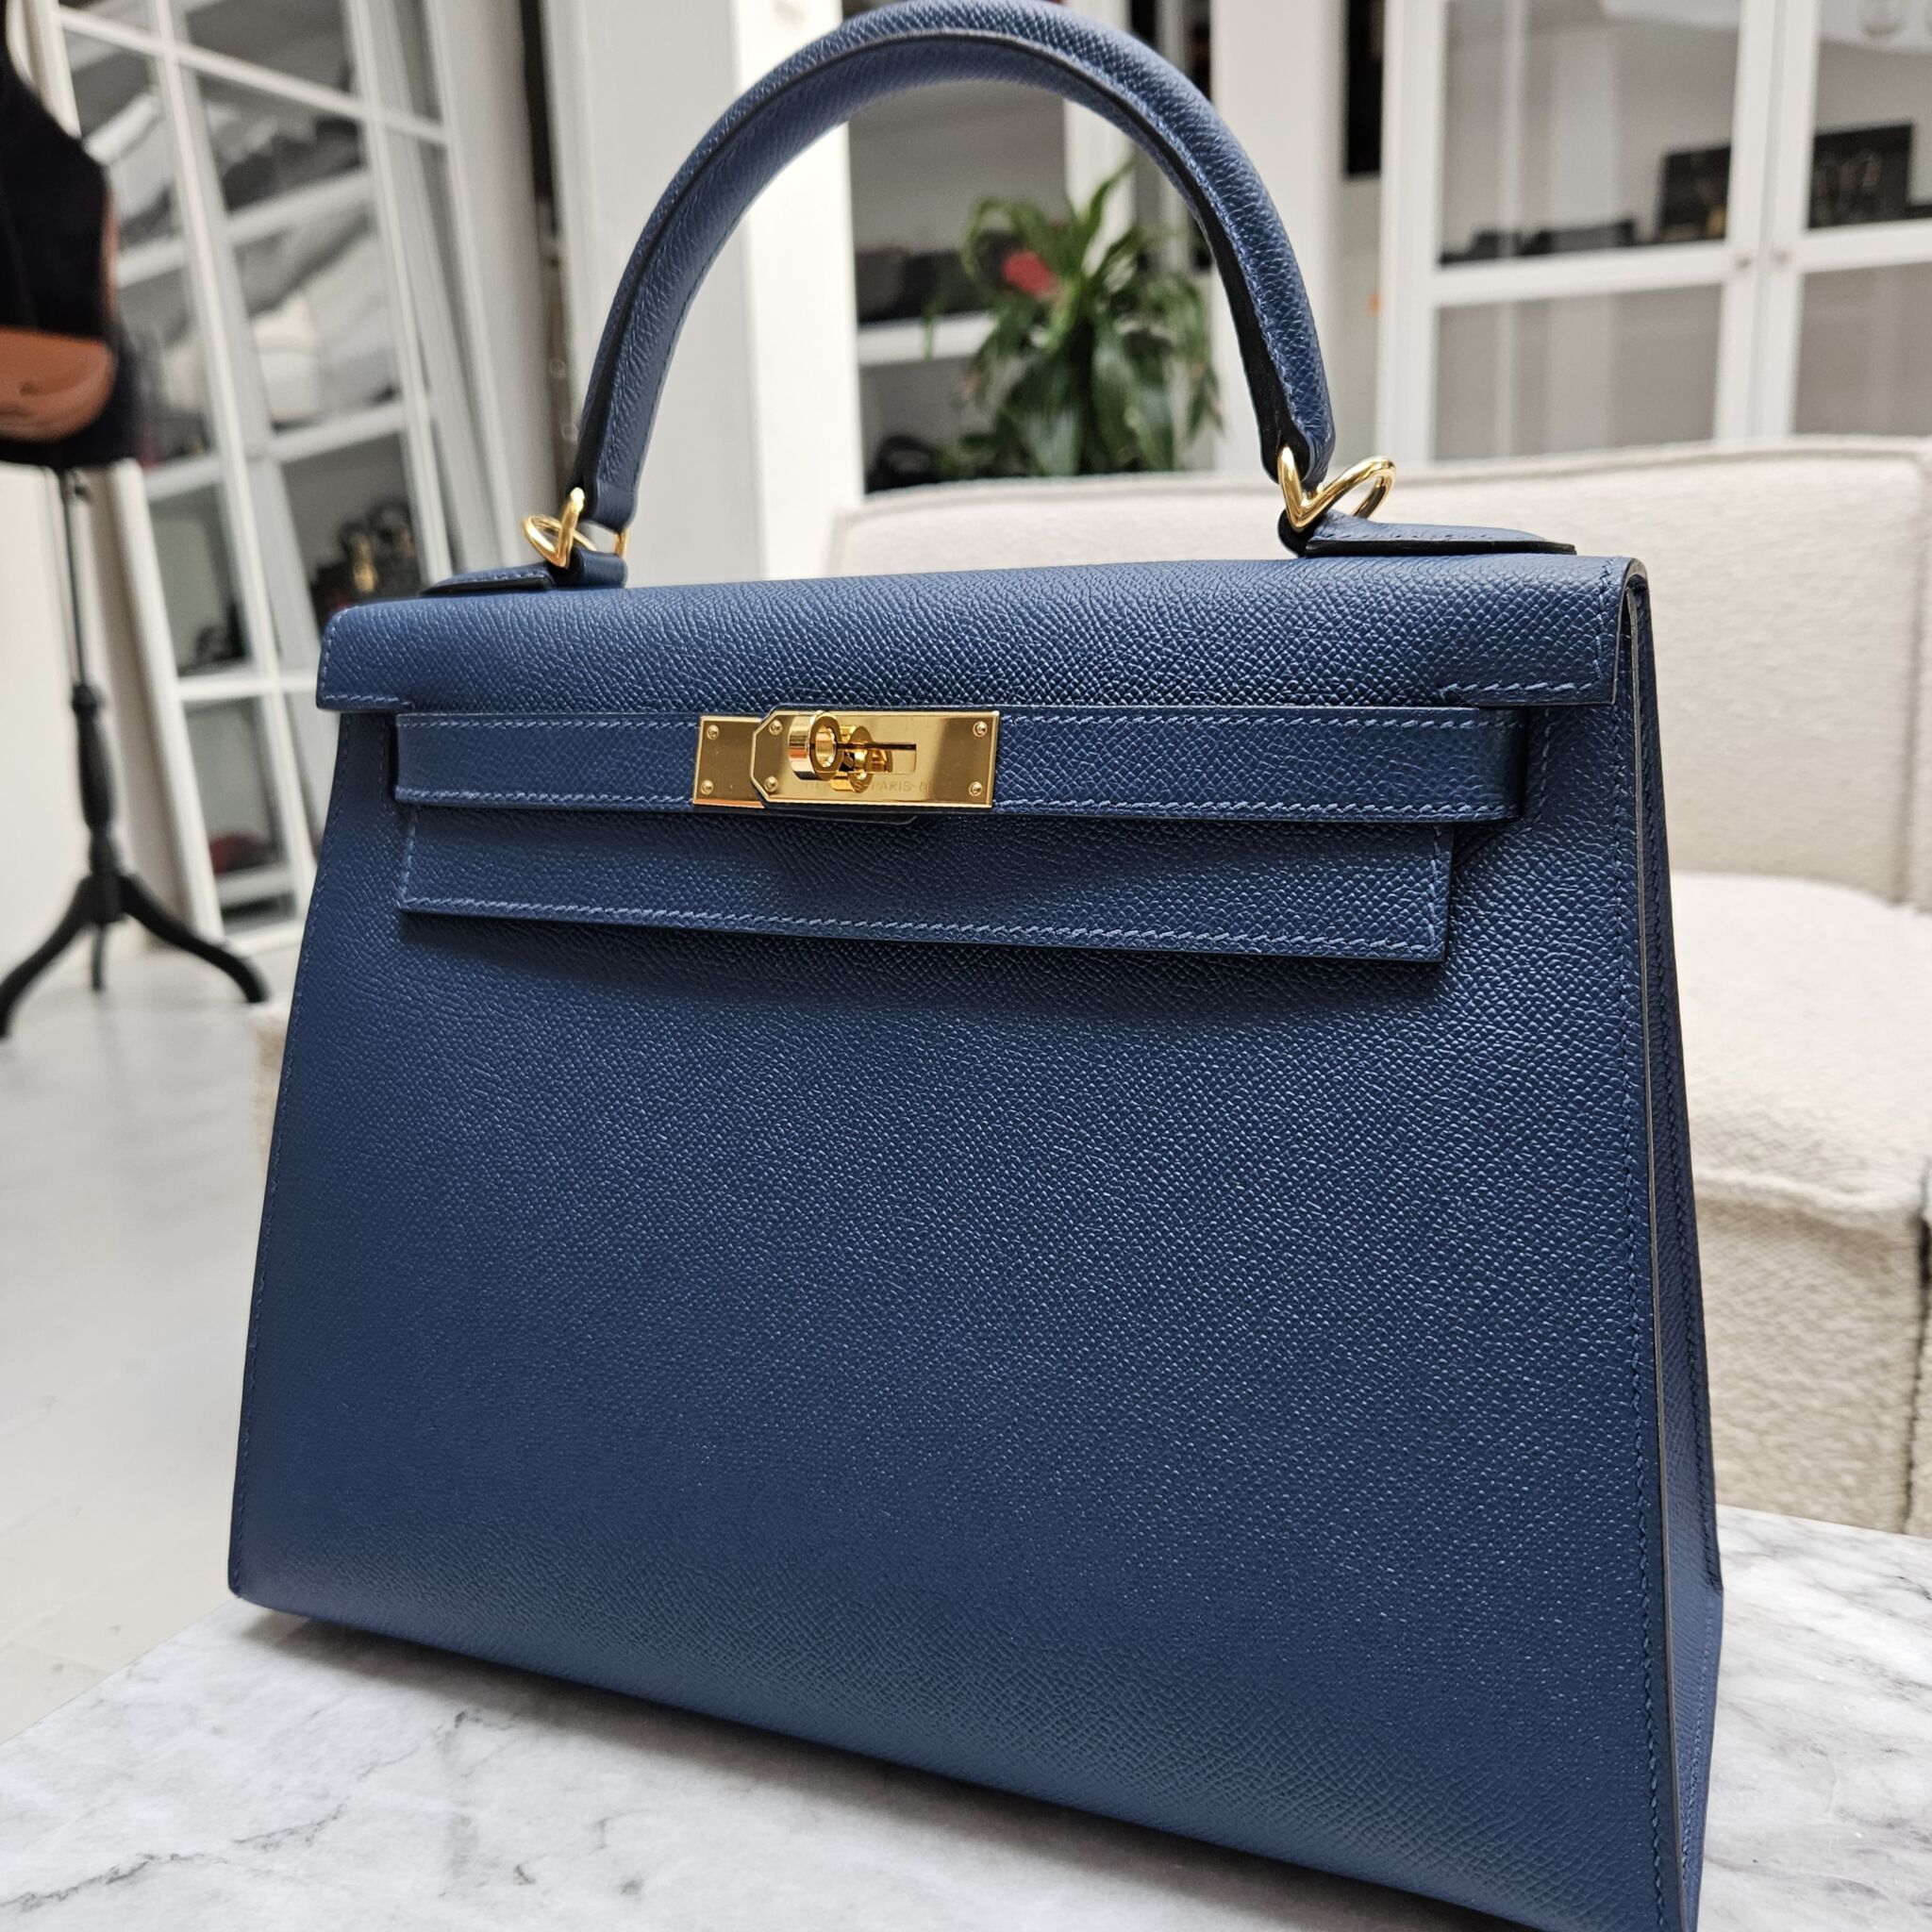 Hermes Kelly bag 25 Sellier Deep blue Epsom leather Gold hardware